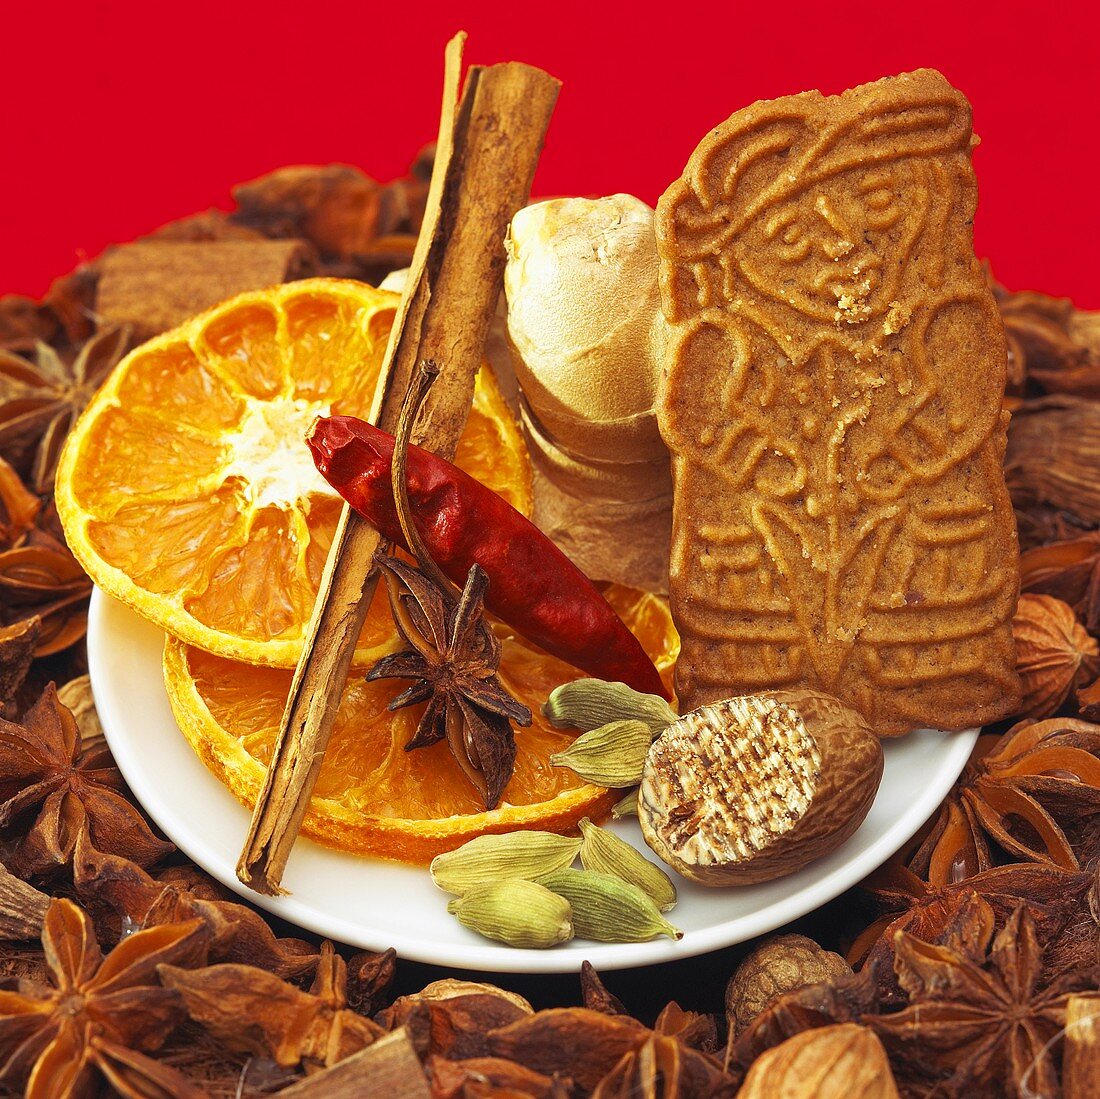 Christmas spices, dried orange slices & spekulatius cookie on plate